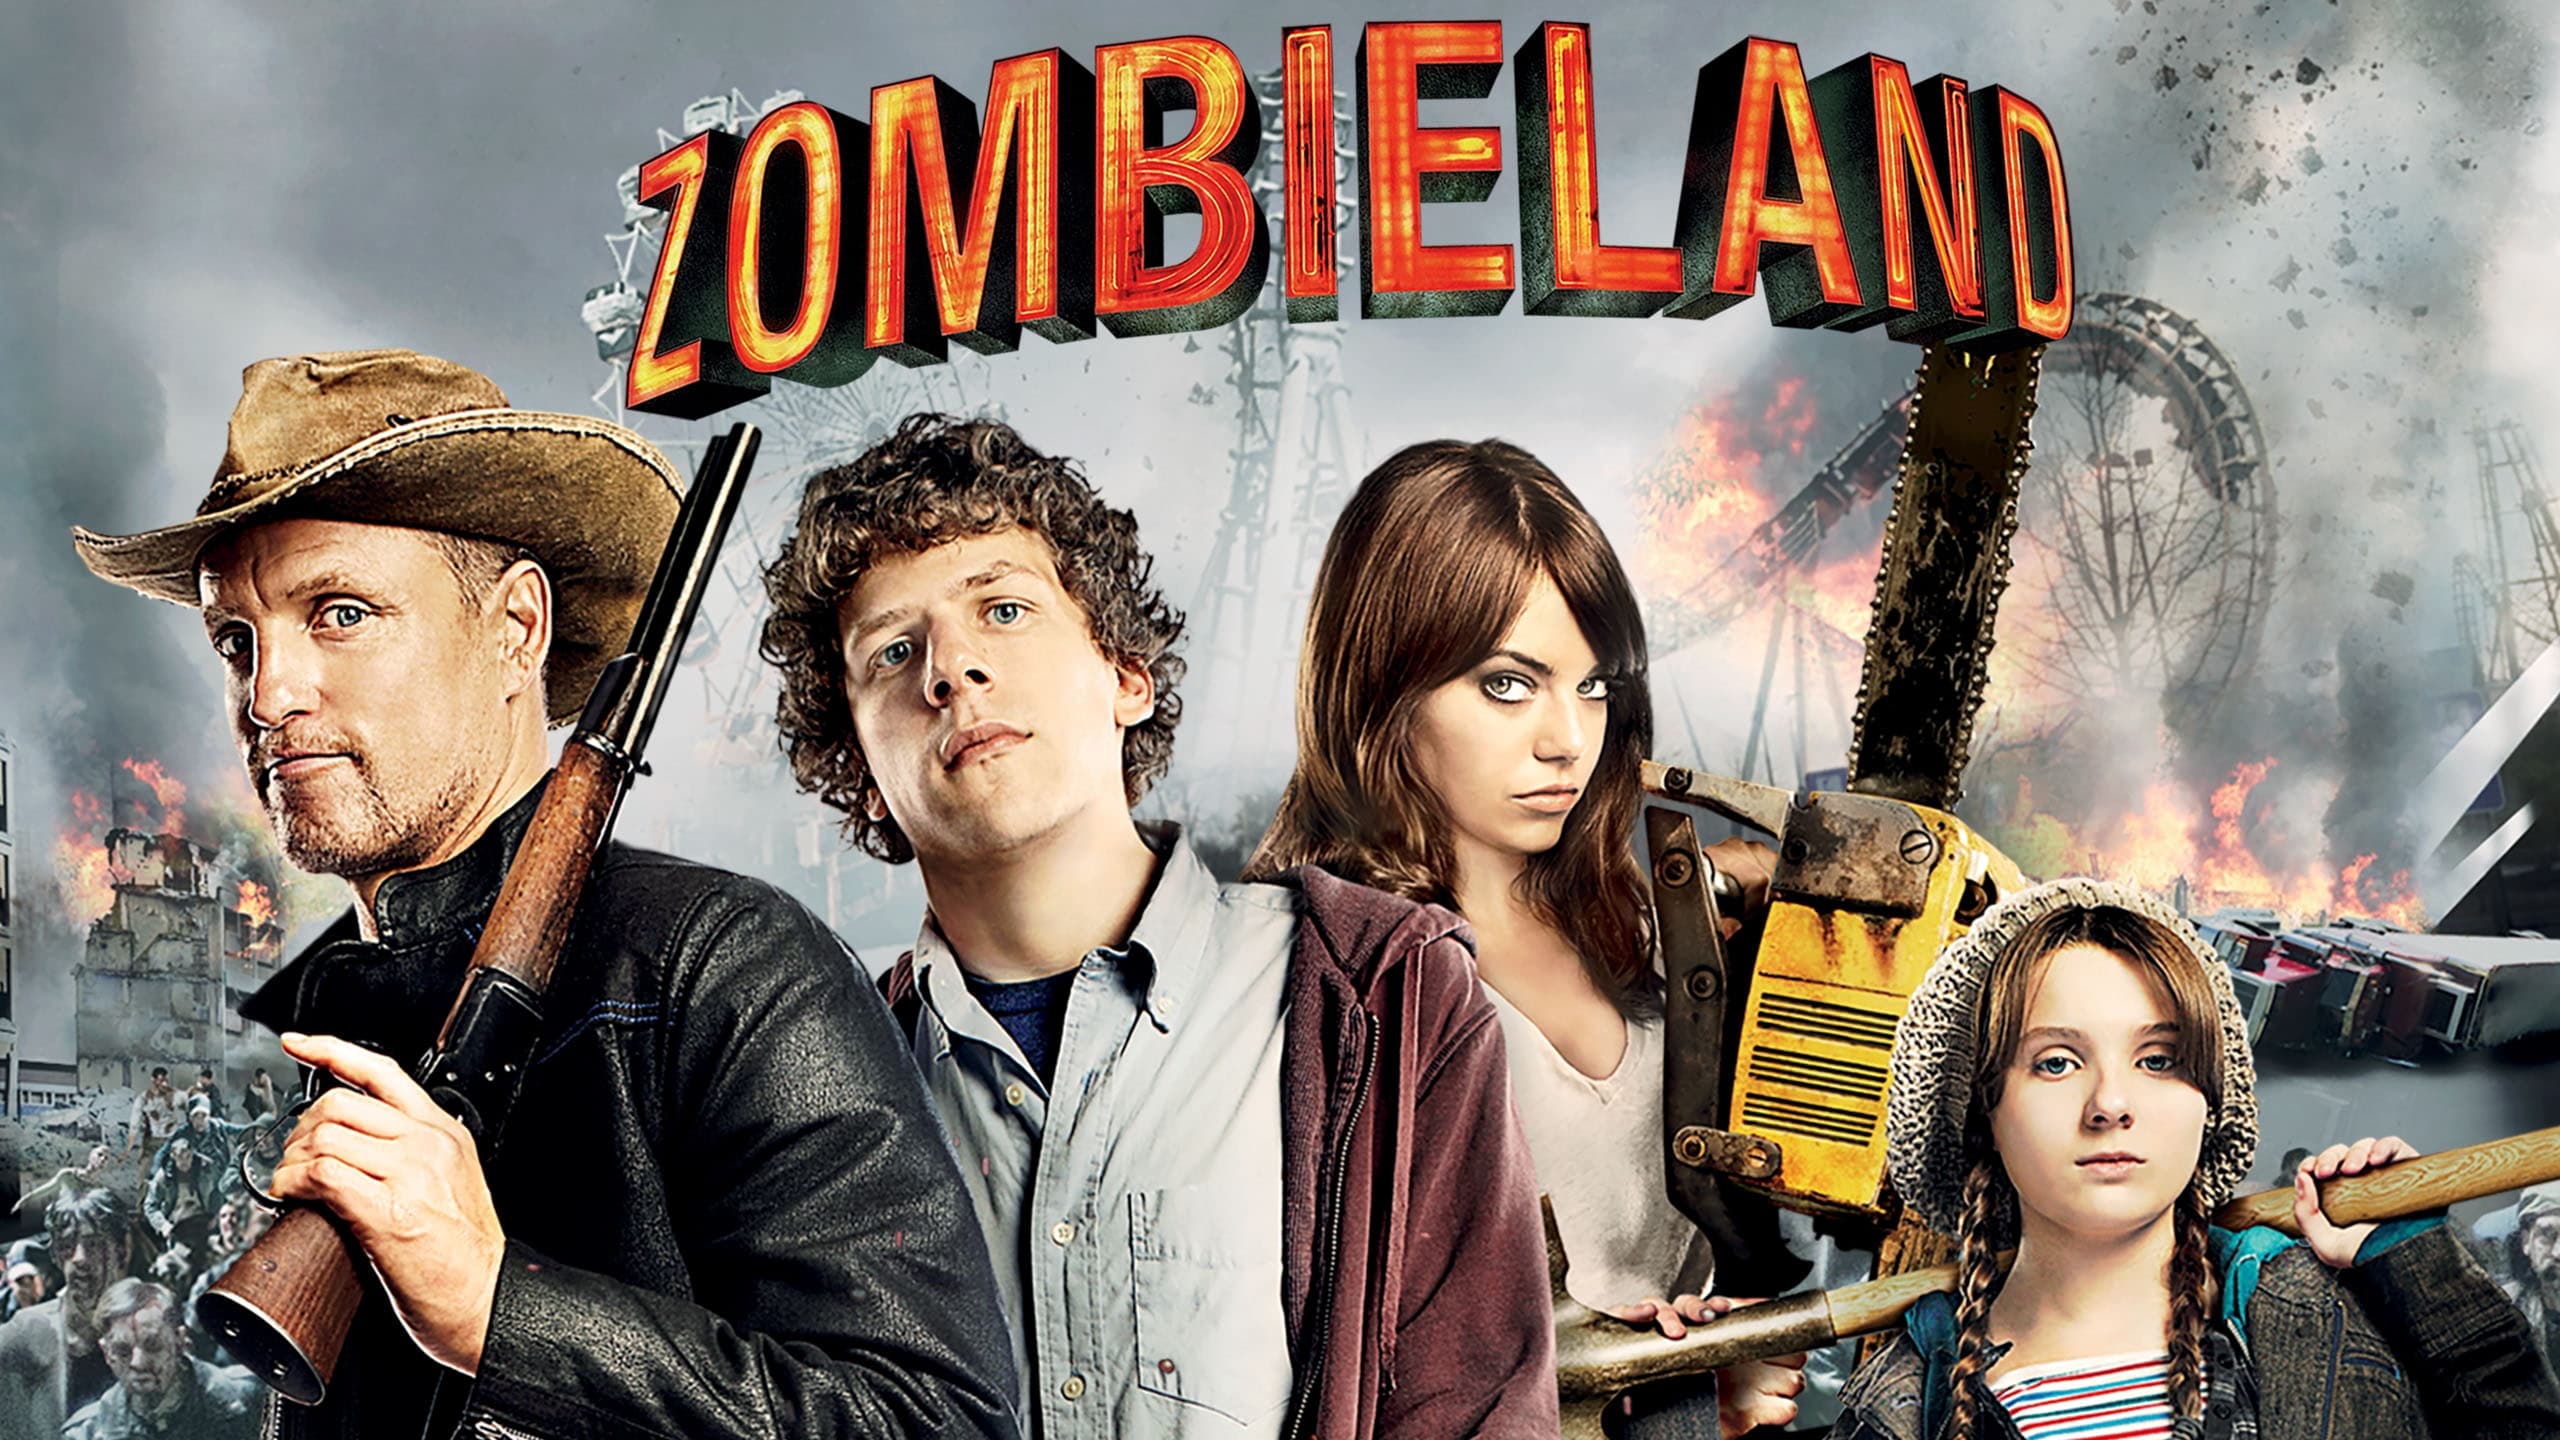 Benvenuti a Zombieland (2009)